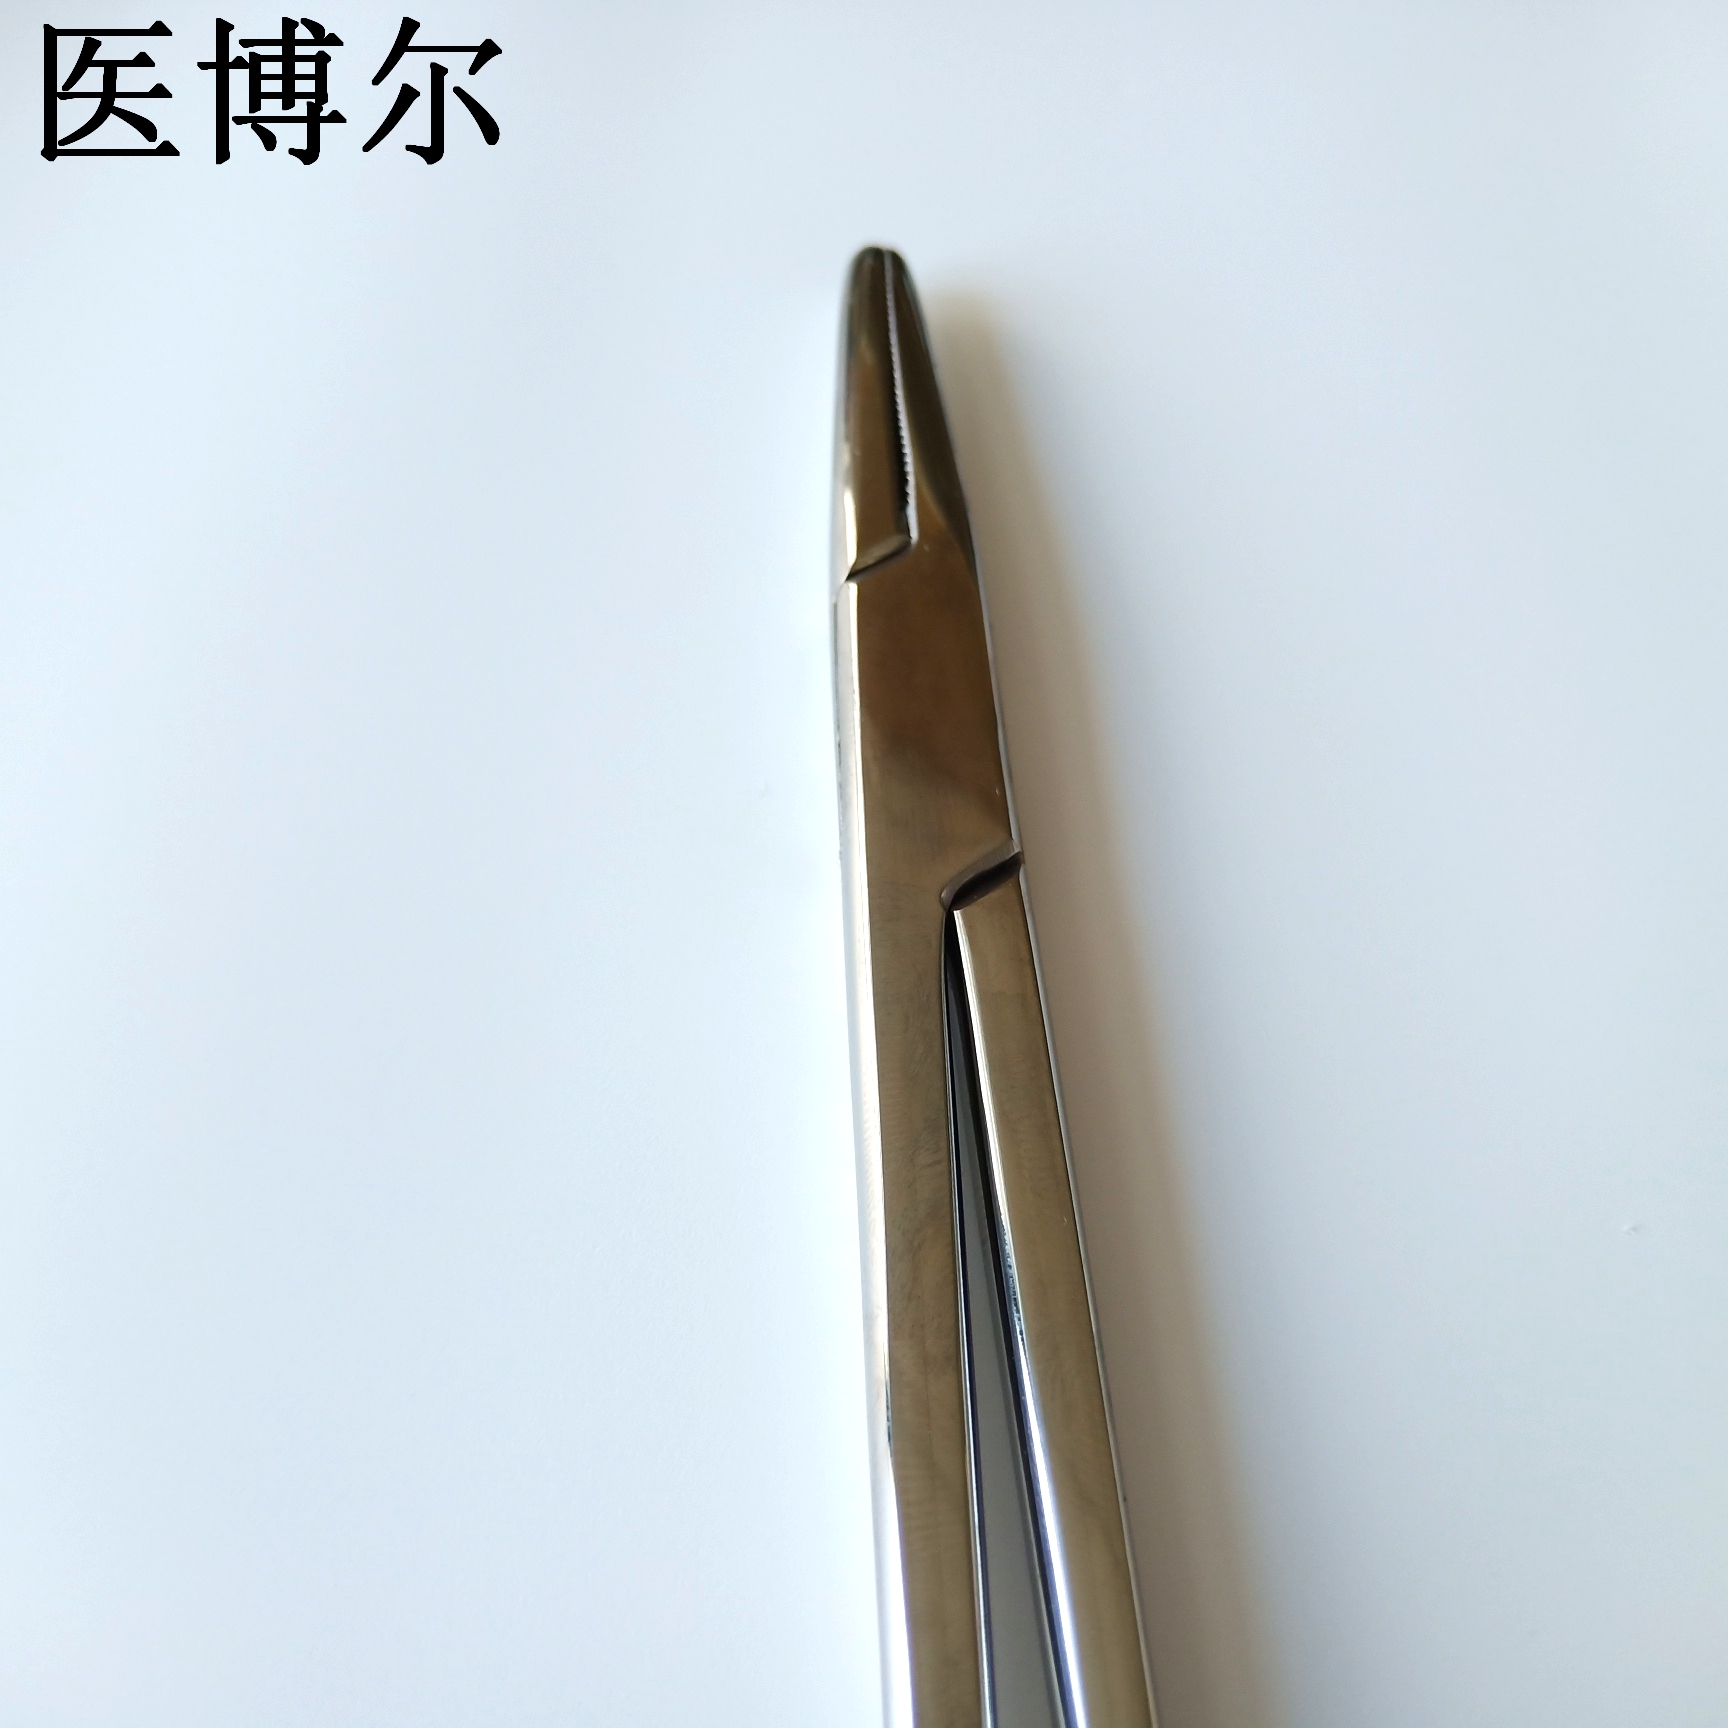 24cm持针器 (4)_看图王.jpg